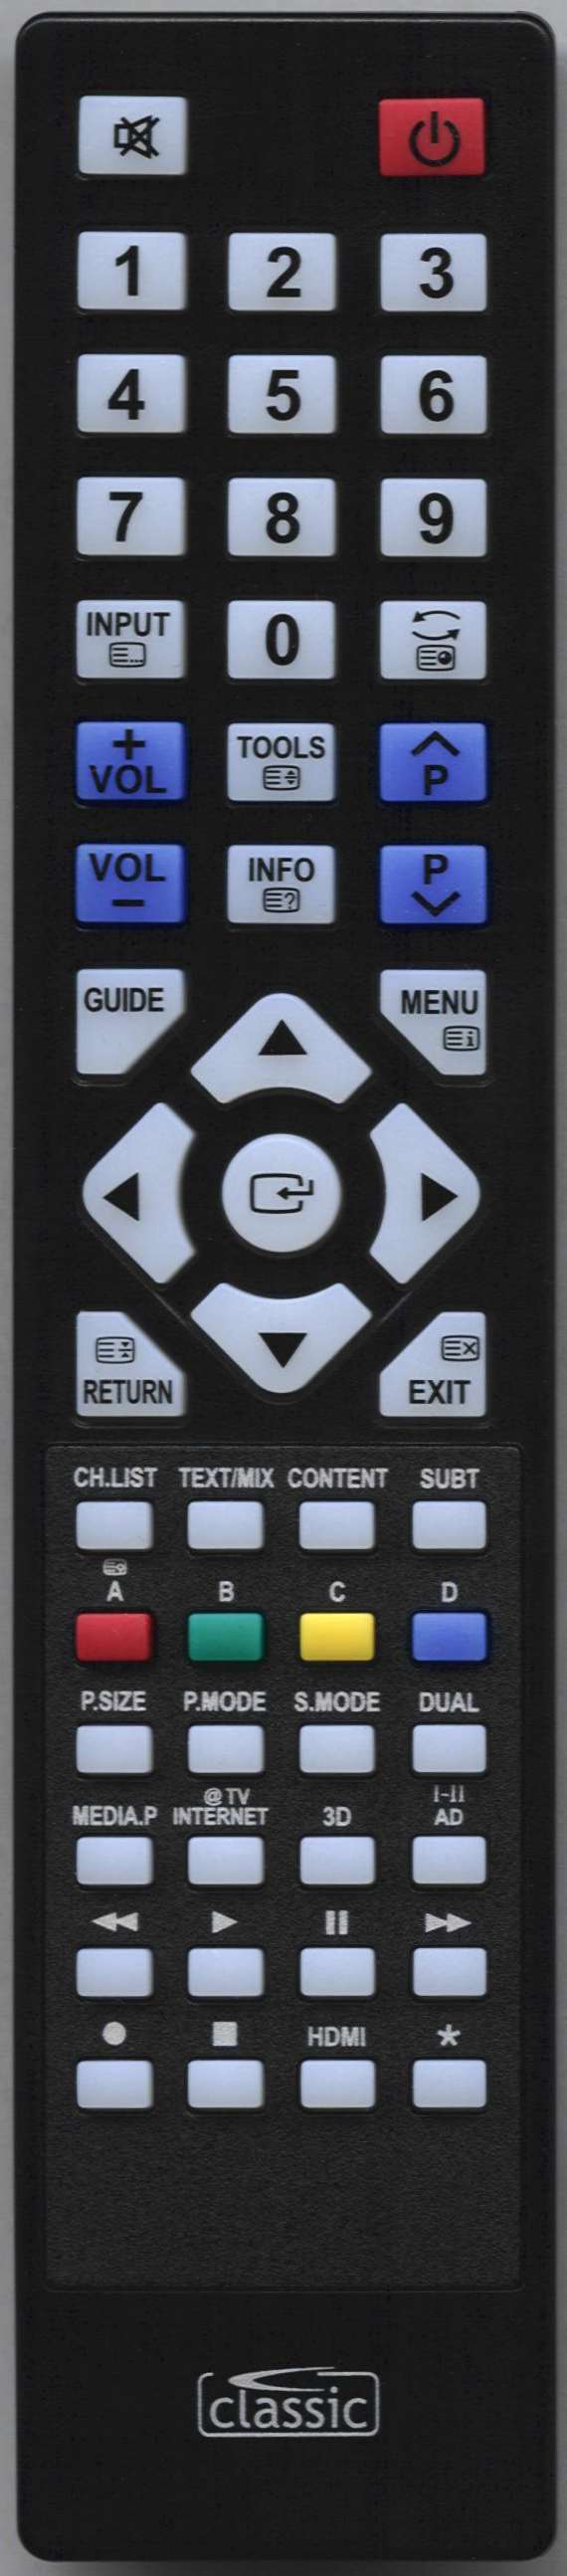 SAMSUNG PS50C430A1WXXC Remote Control